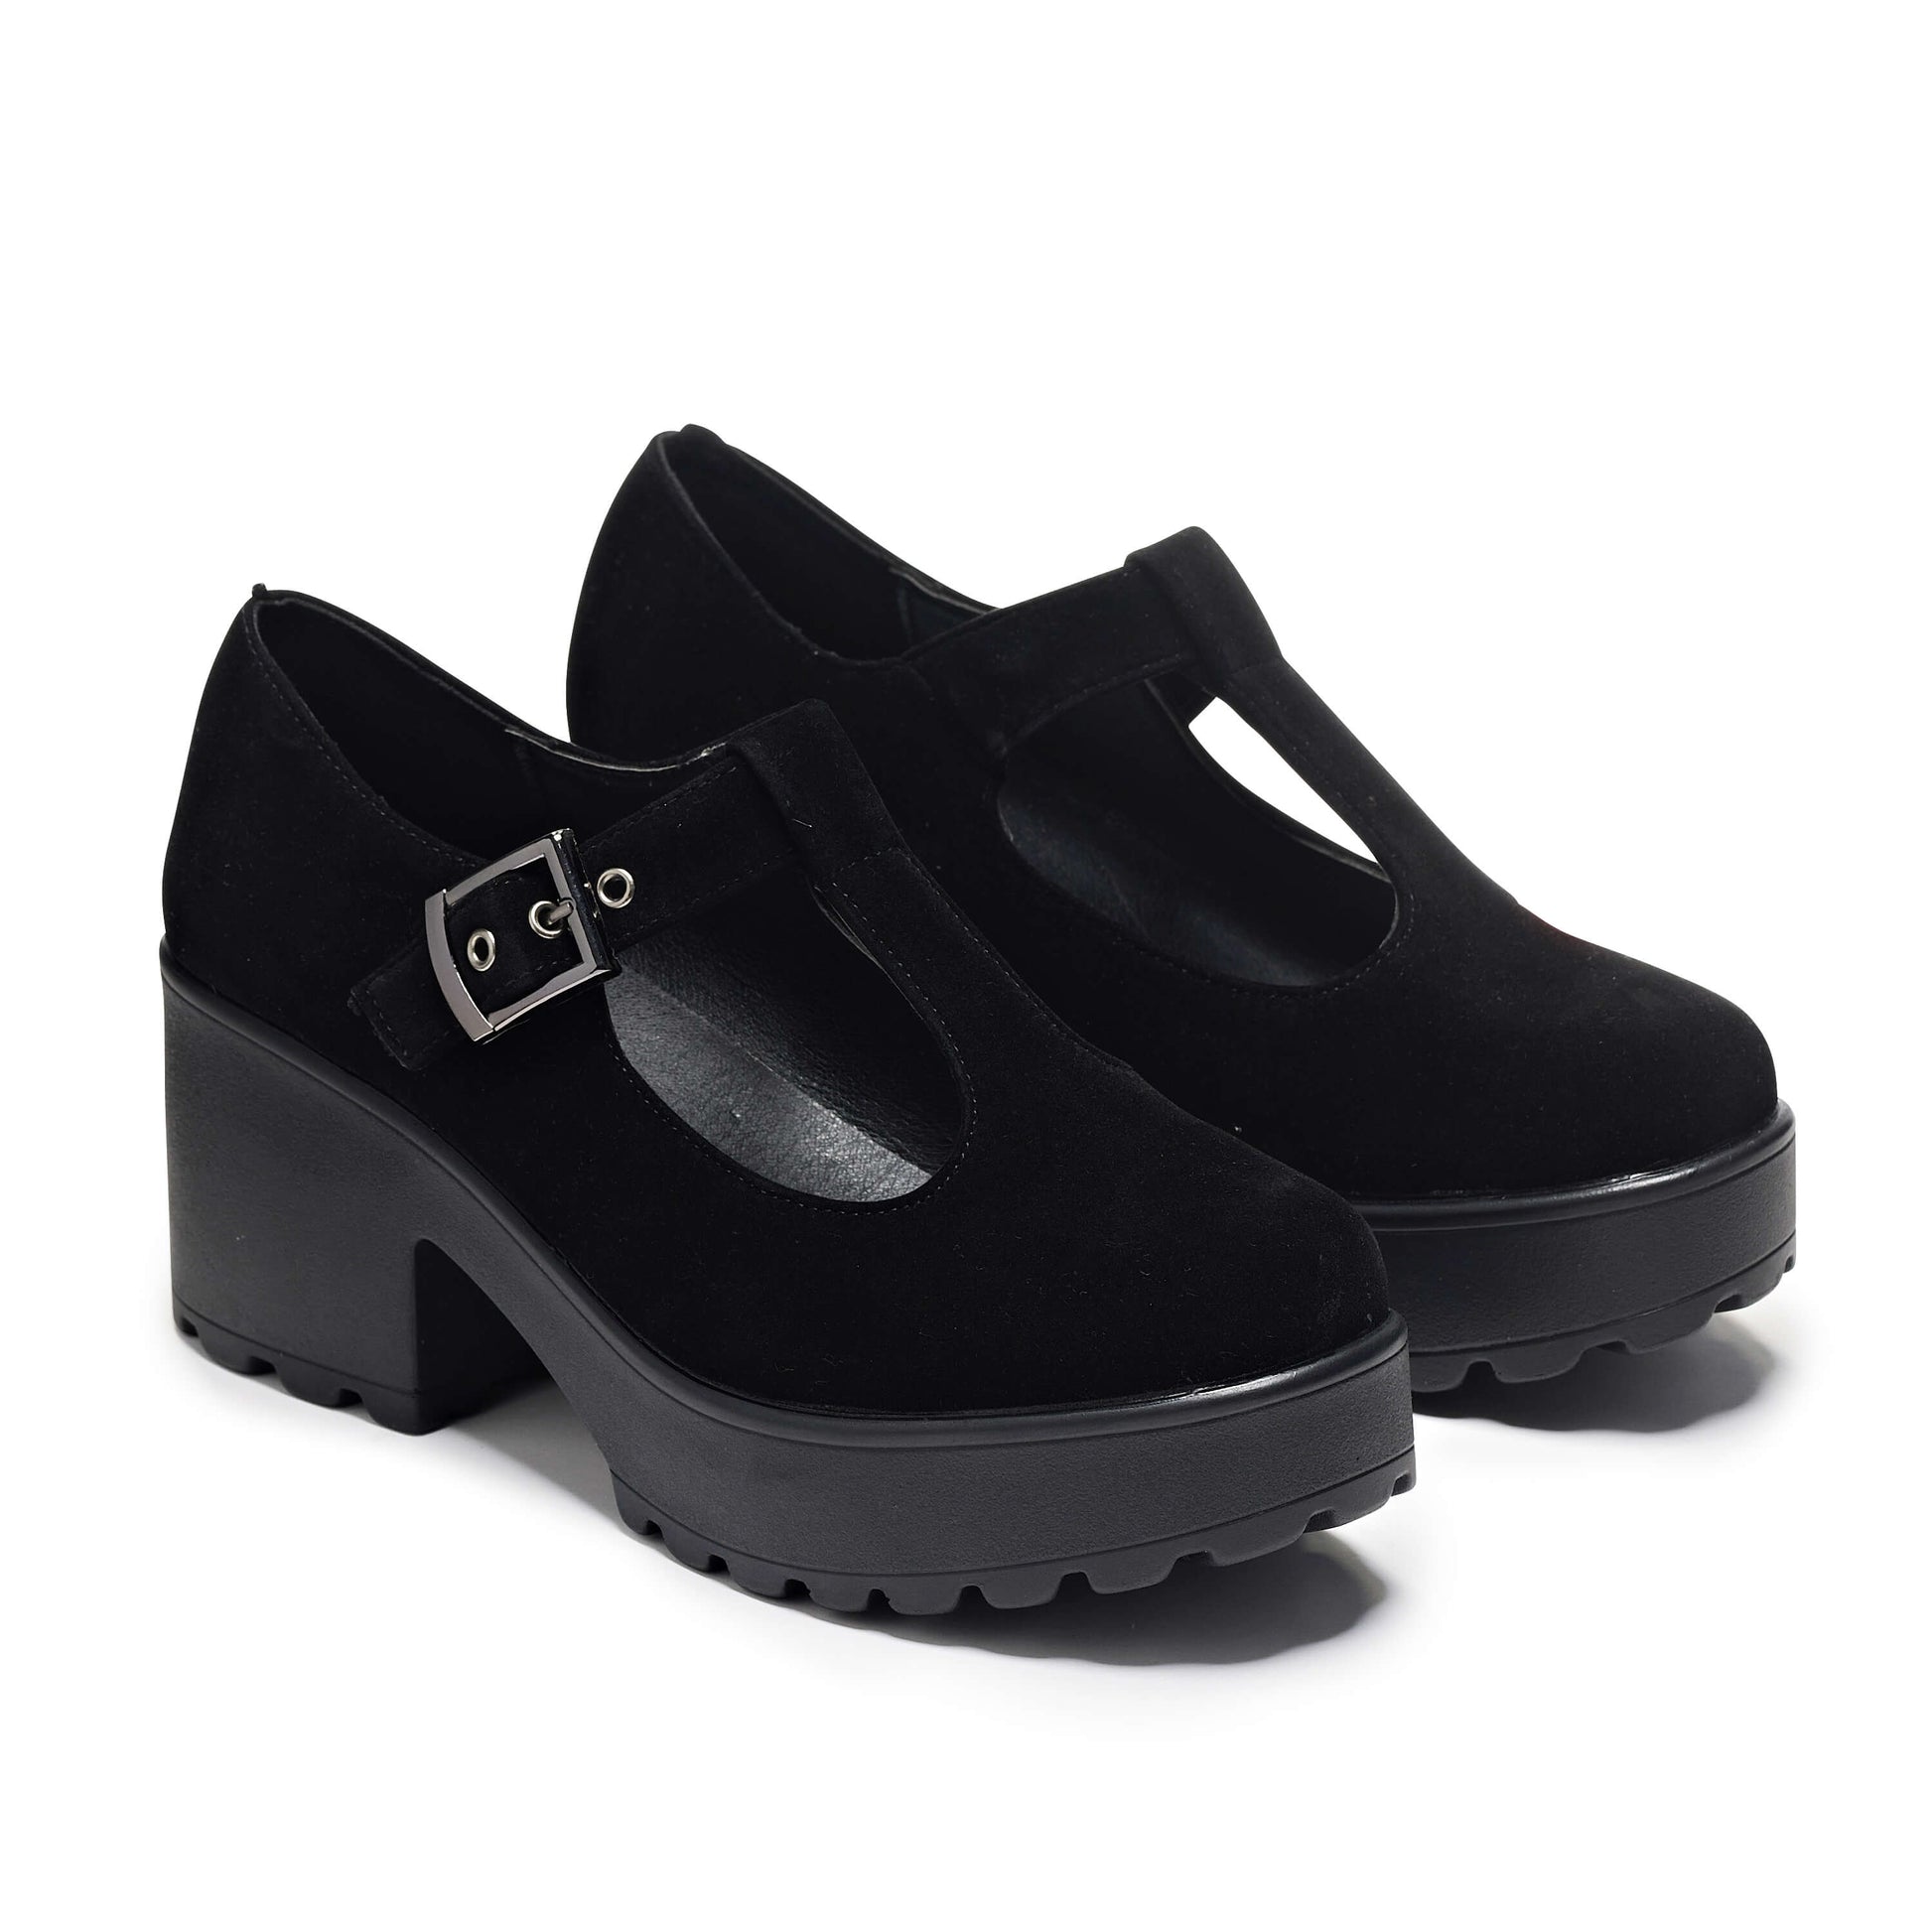 Sai Black Mary Jane Shoes 'Suede Edition' - Mary Janes - KOI Footwear - Black - Three-Quarter View